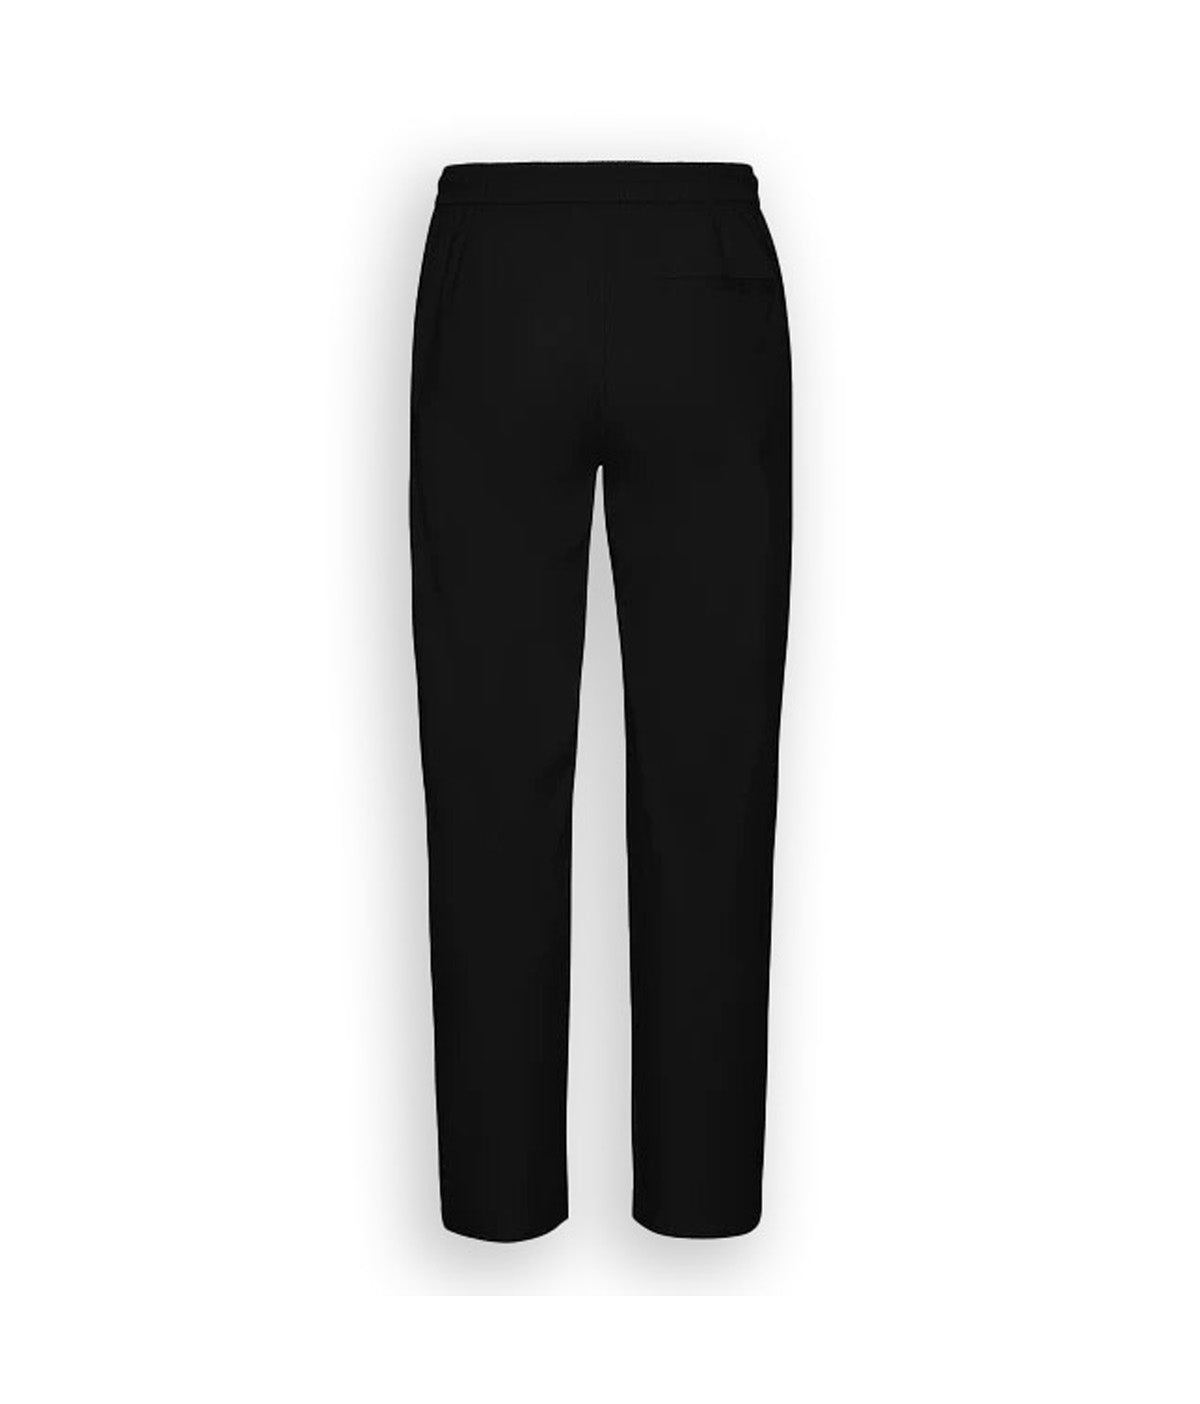 Colorful Standard Black Unisex Elastic Organic Cotton Trousers